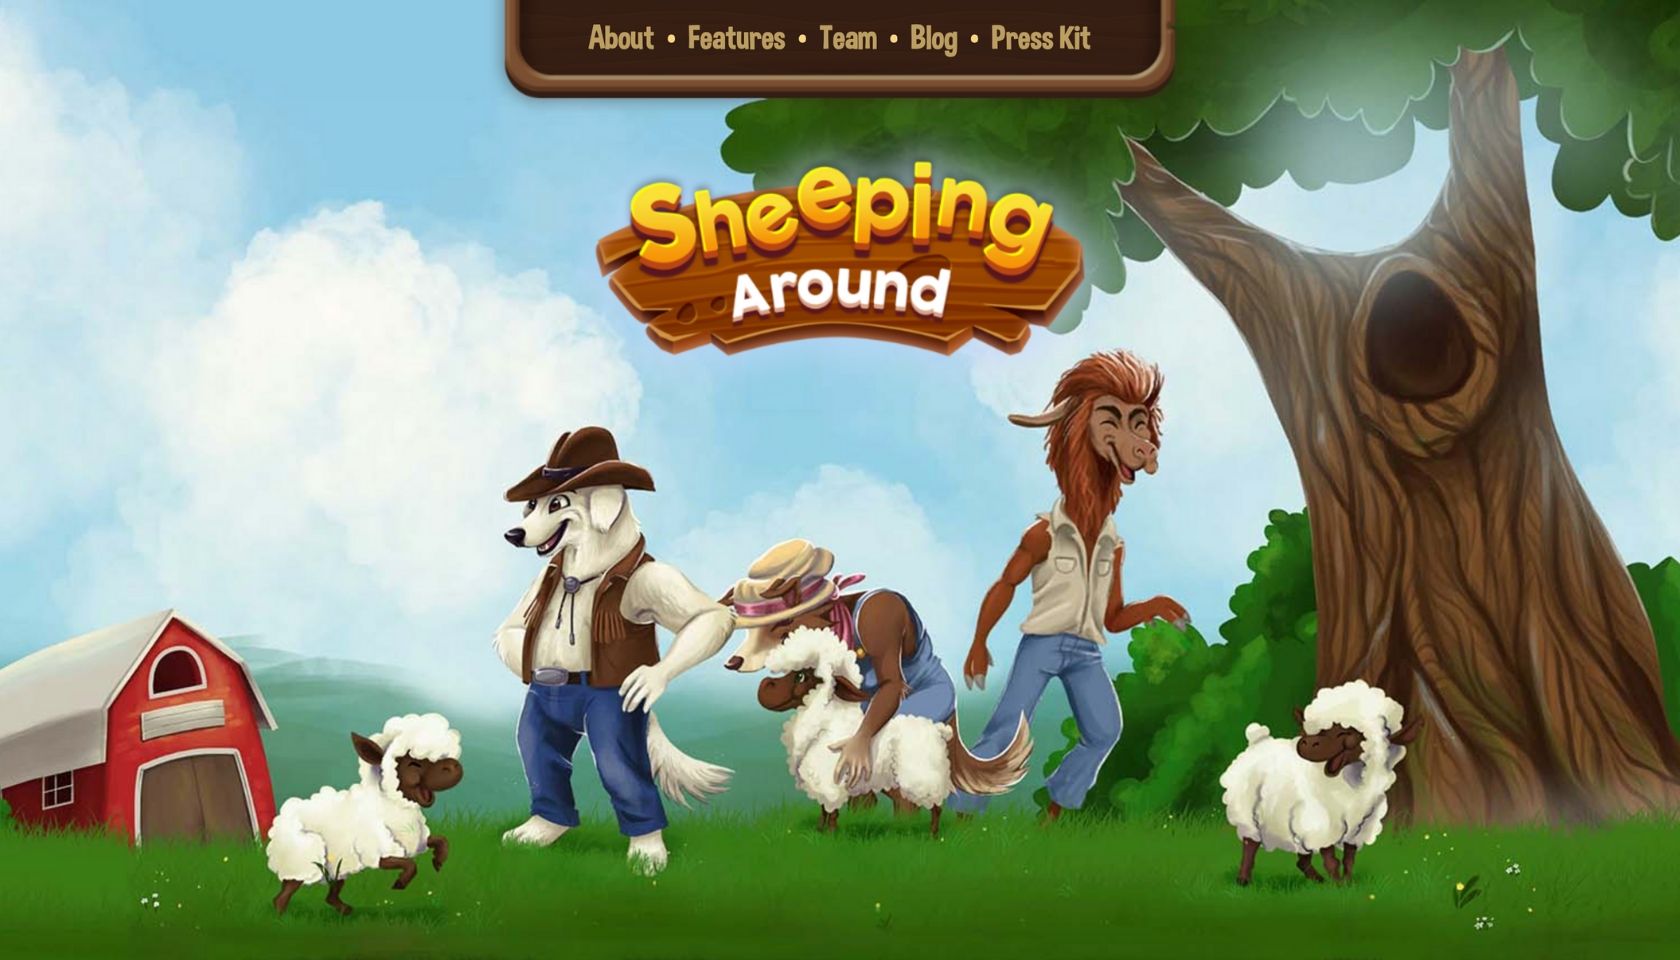 Sheeping Around